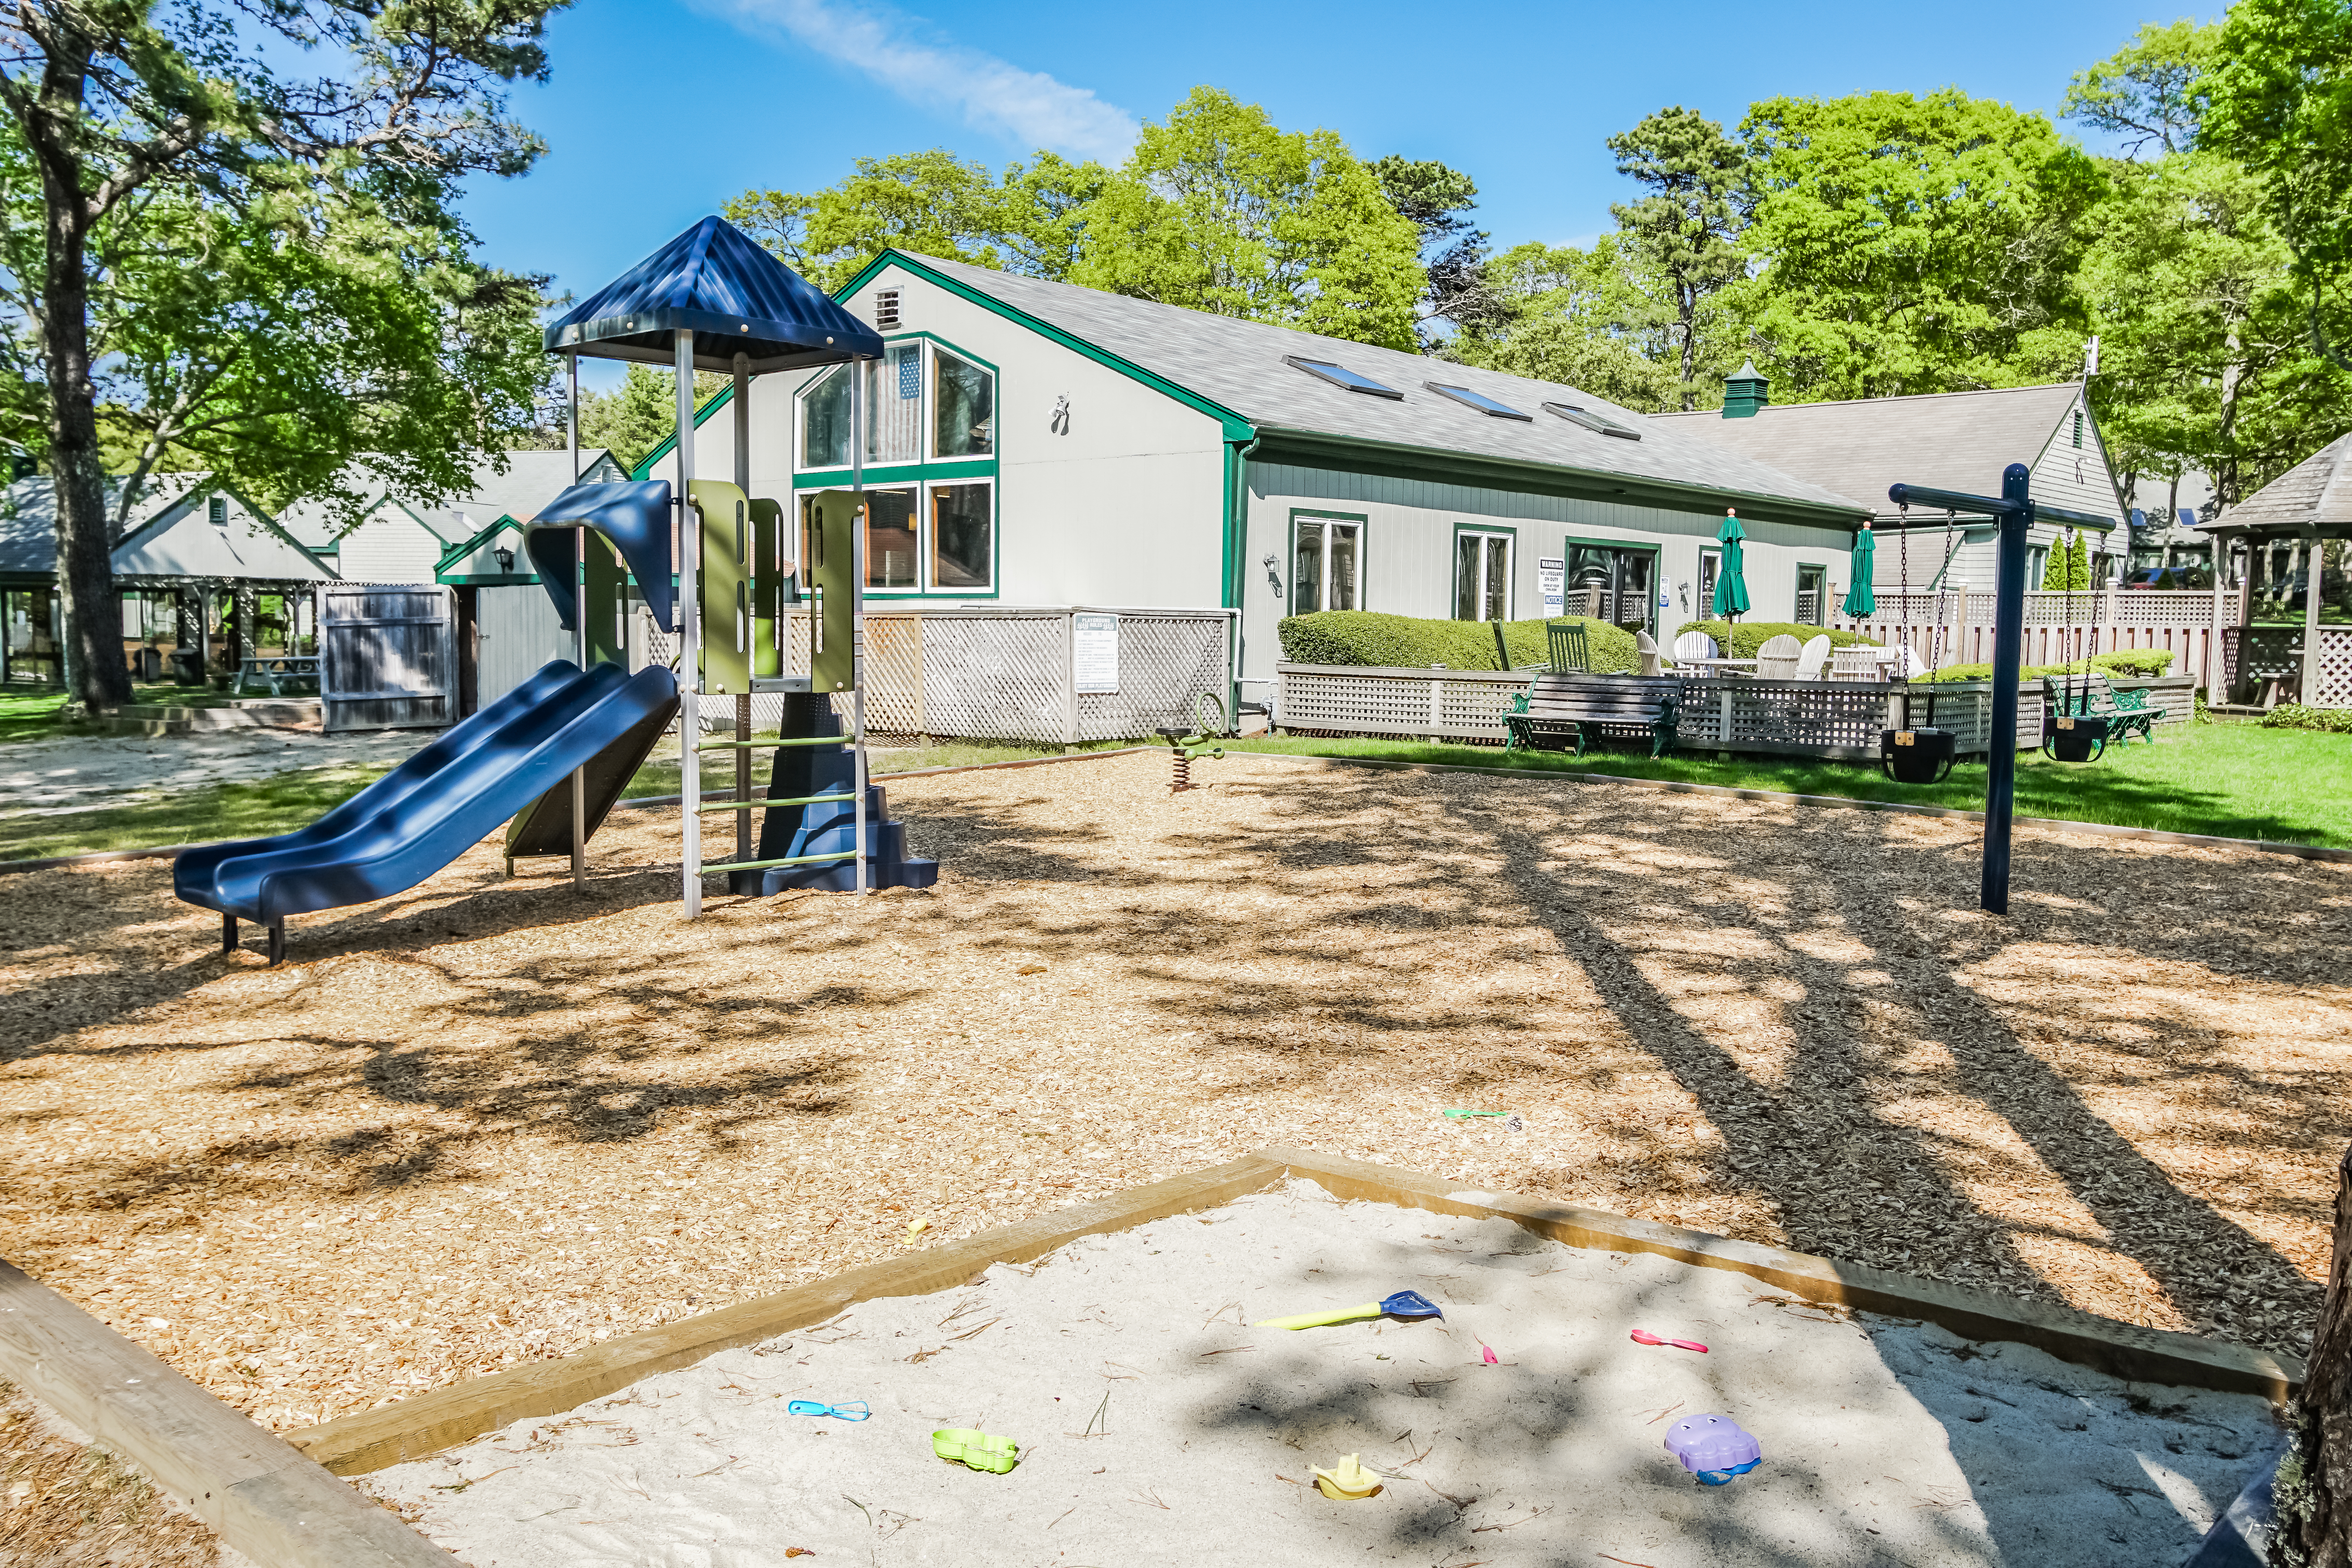 An enjoyable children's playground at VRI's Cape Cod Holiday Estates in Massachusetts.